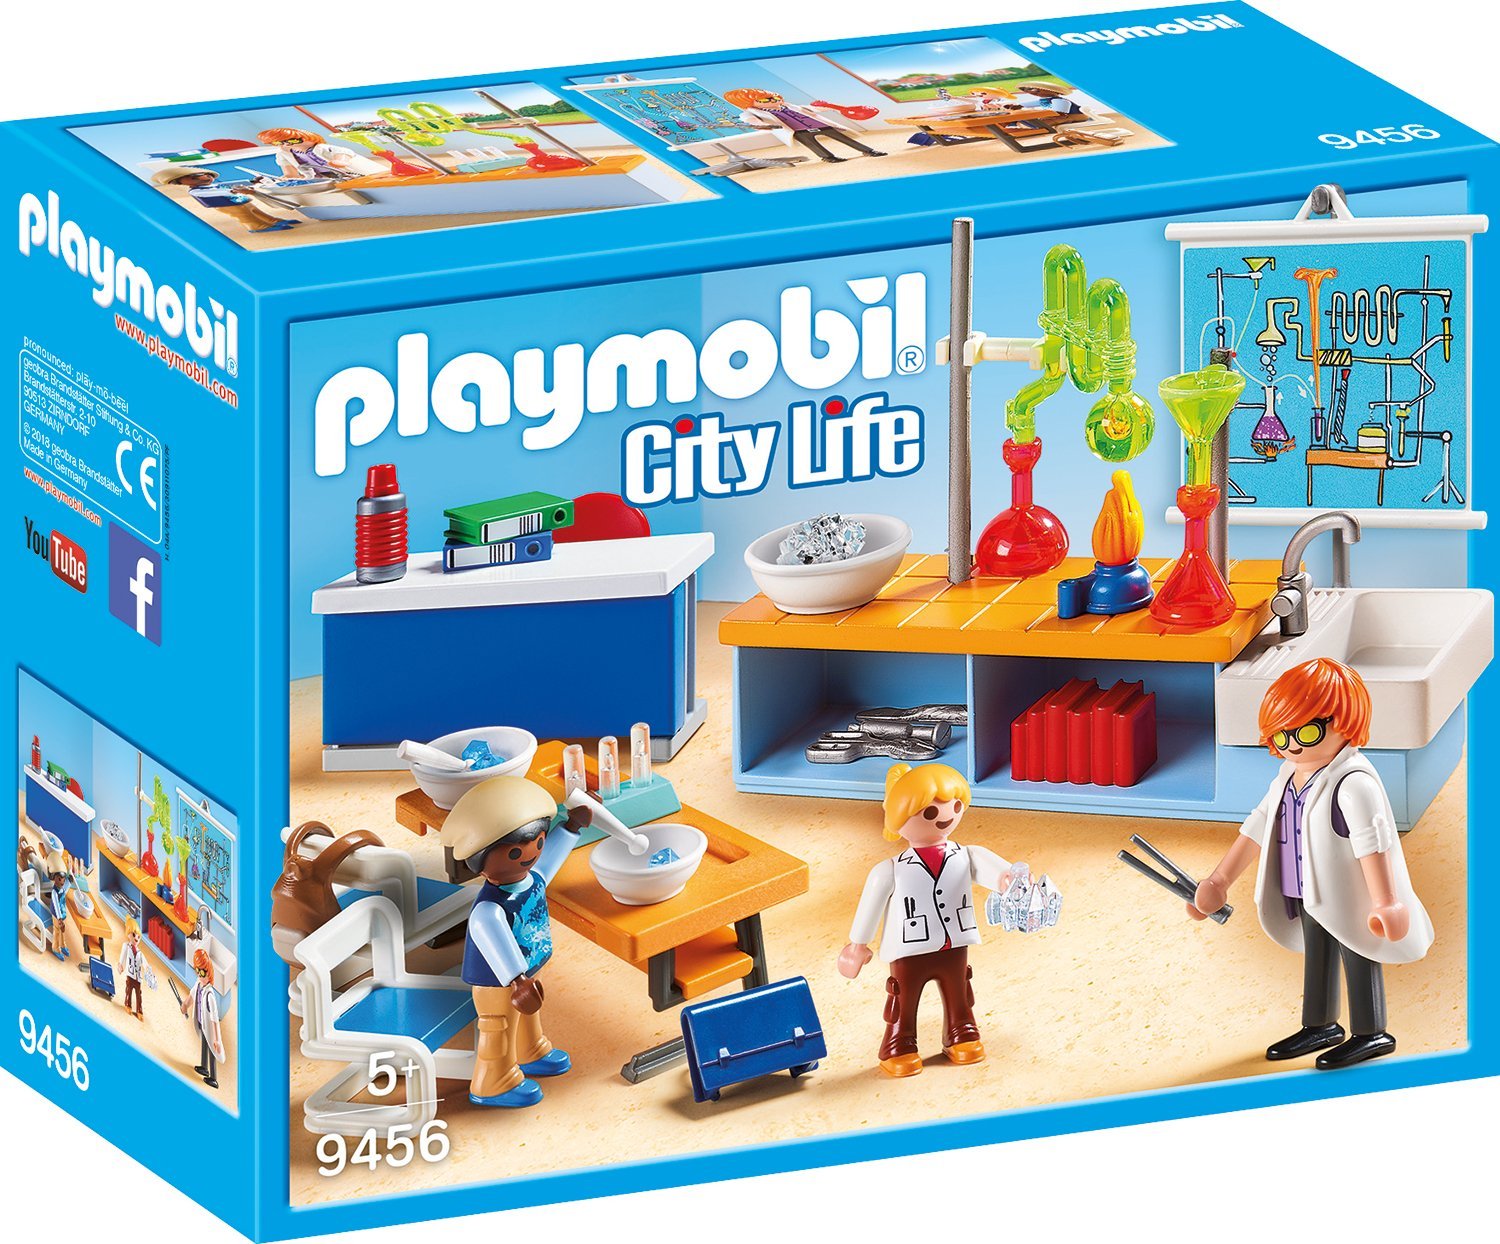 Playmobil 9456 - Chemieunterricht